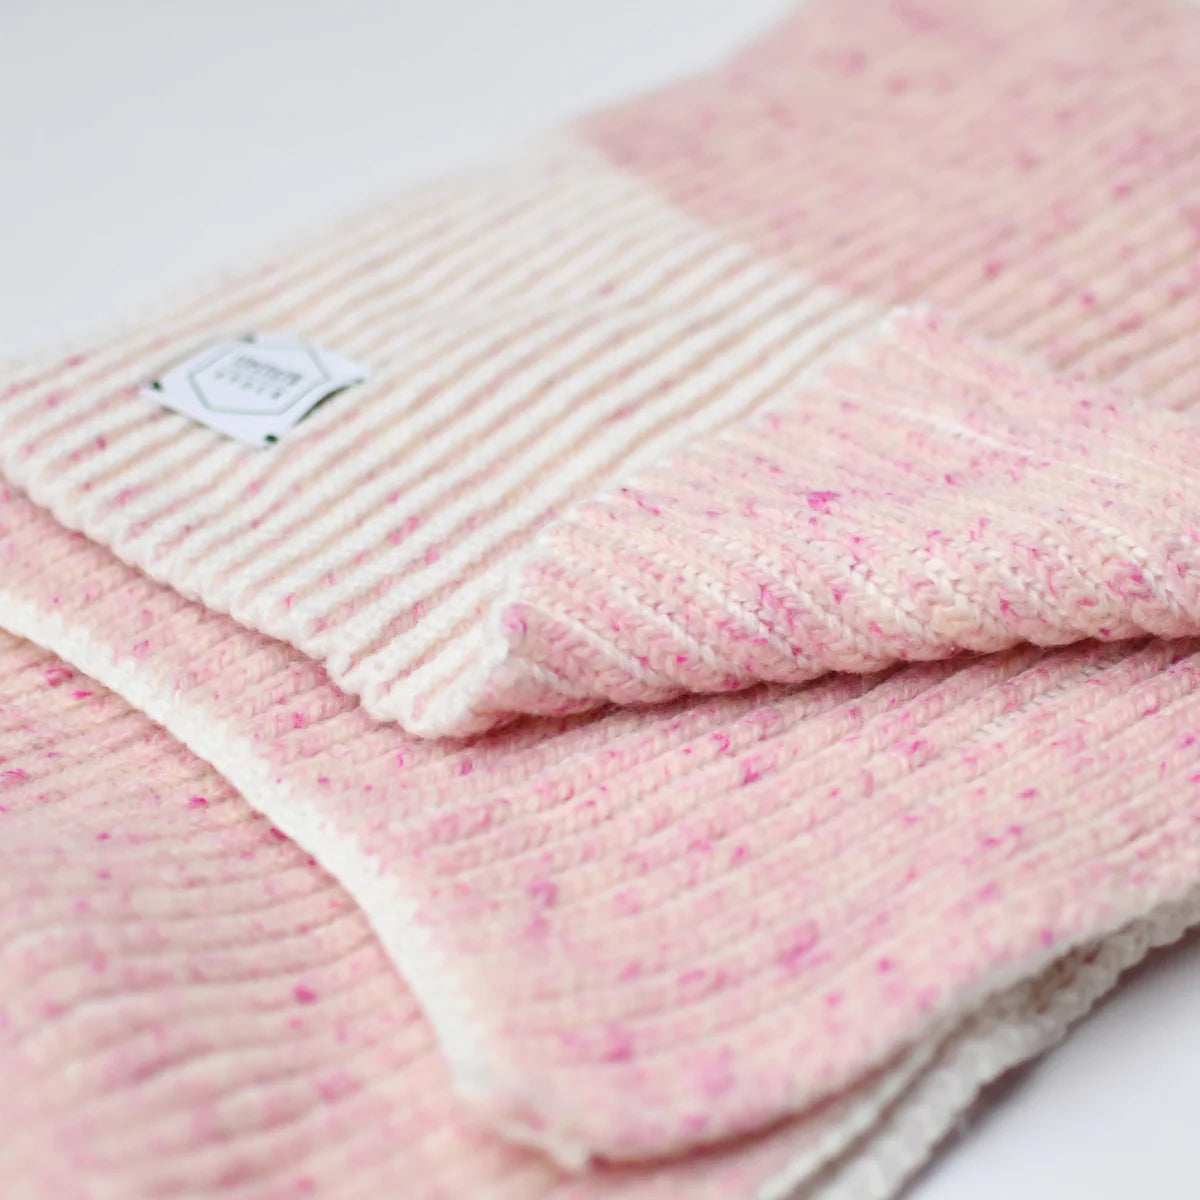 Upstate Stock Ragg Wool Scarf - Cherry Blossom Tweed